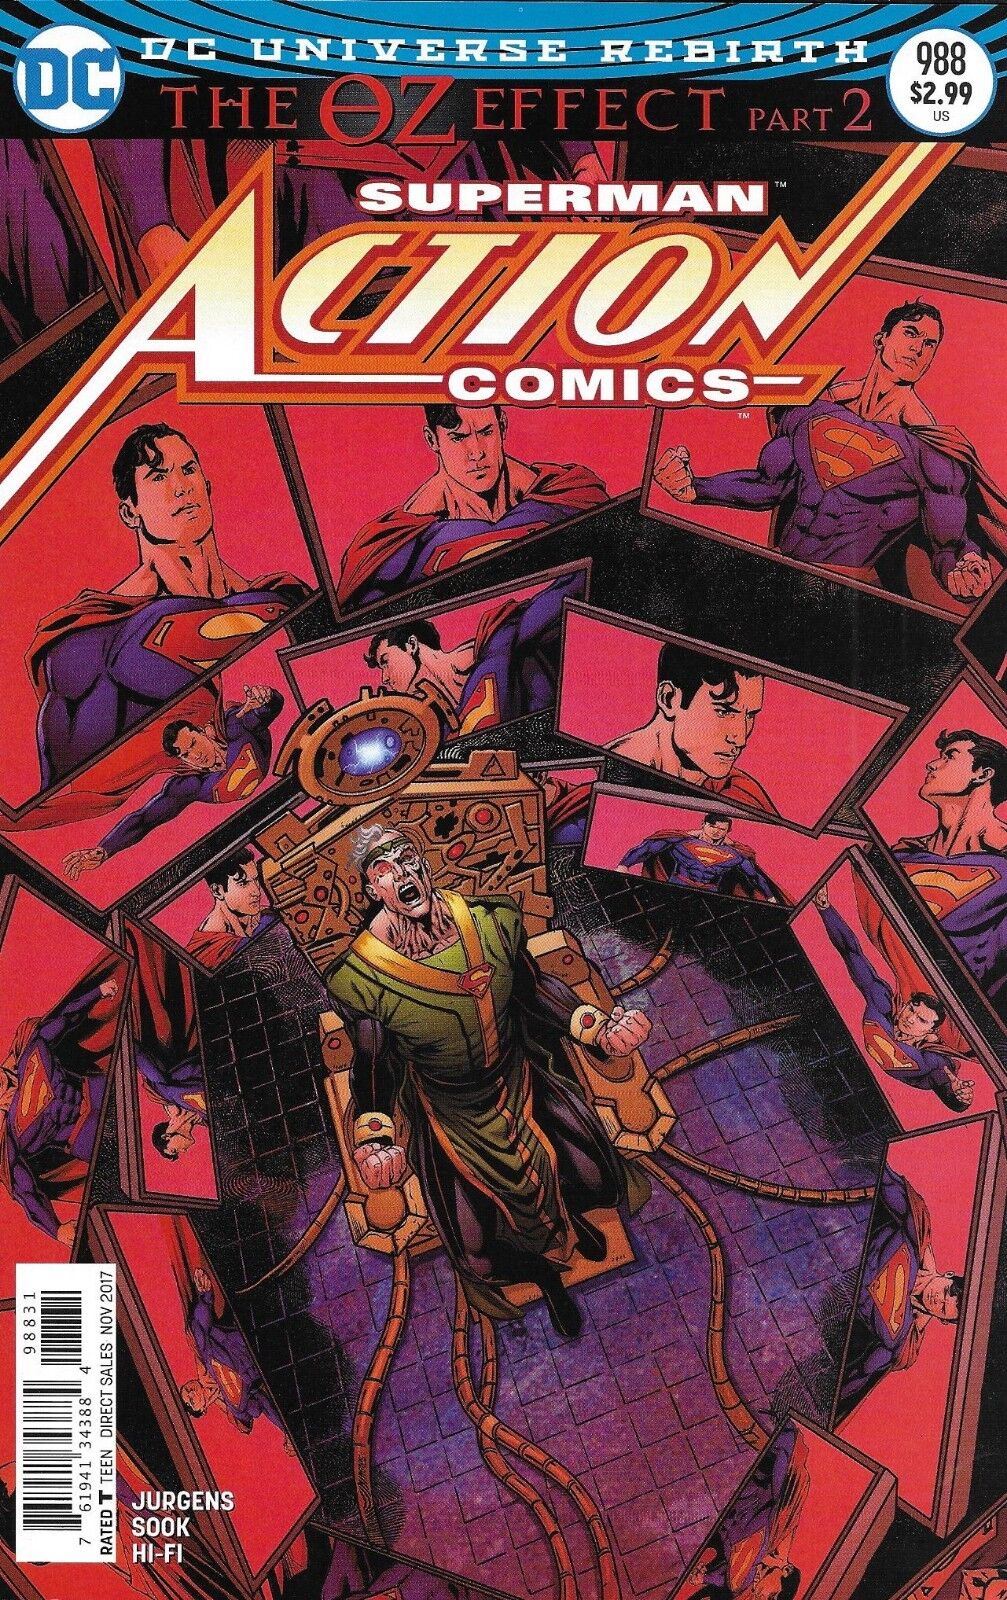 Action Comics #988 Variant Edition (Oz Effect) (1938)